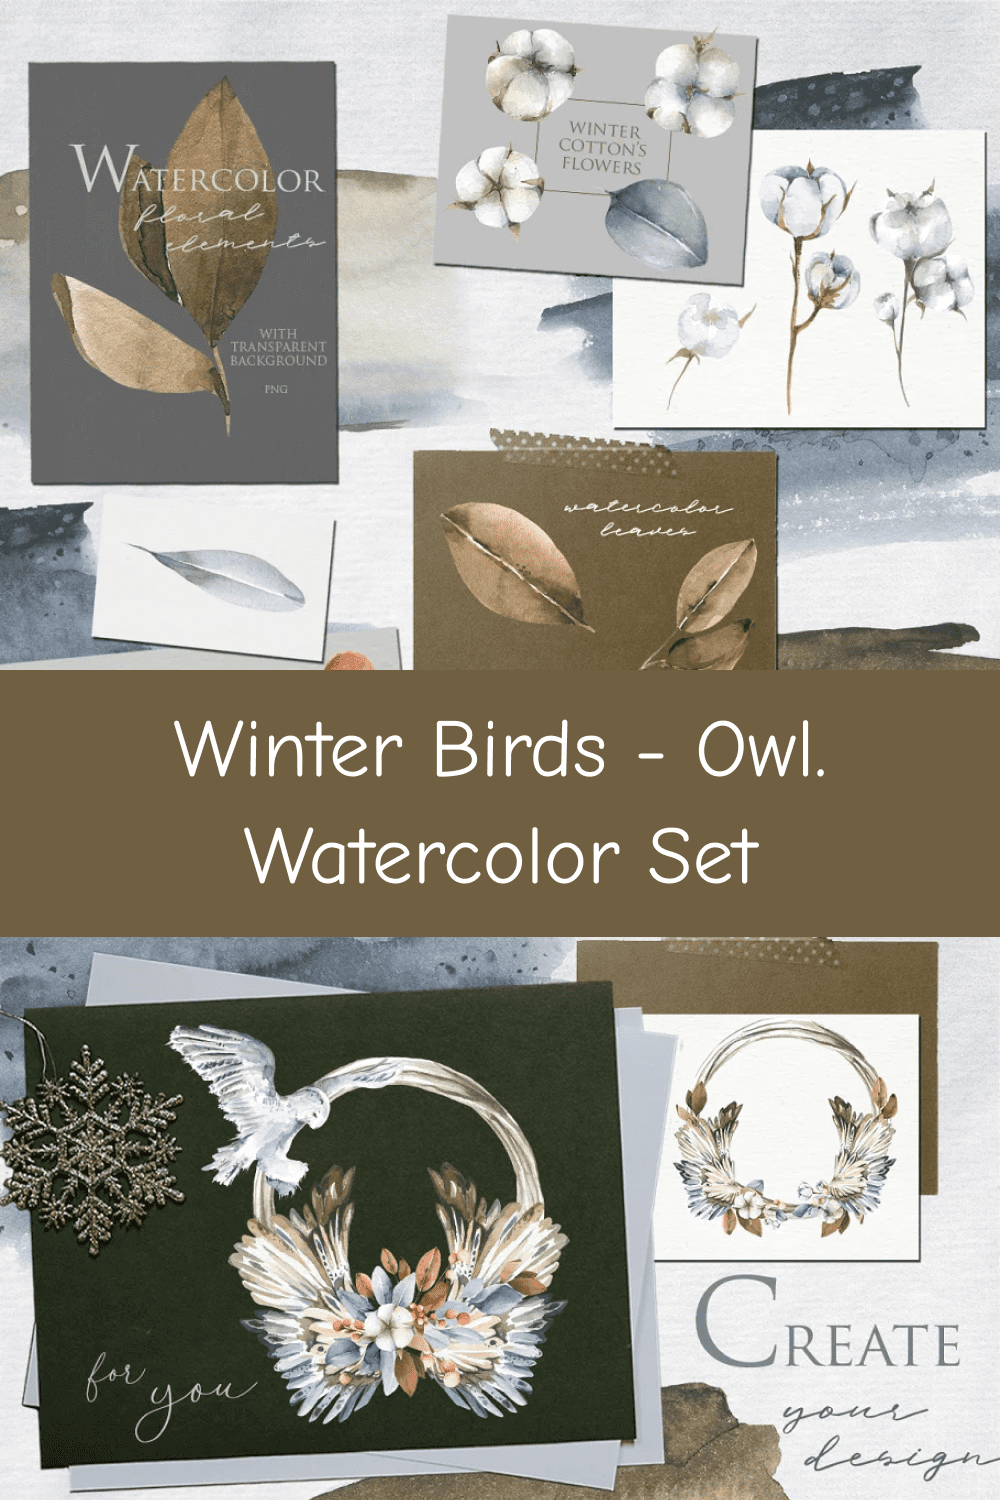 03 winter birds owl. watercolor set pinterest